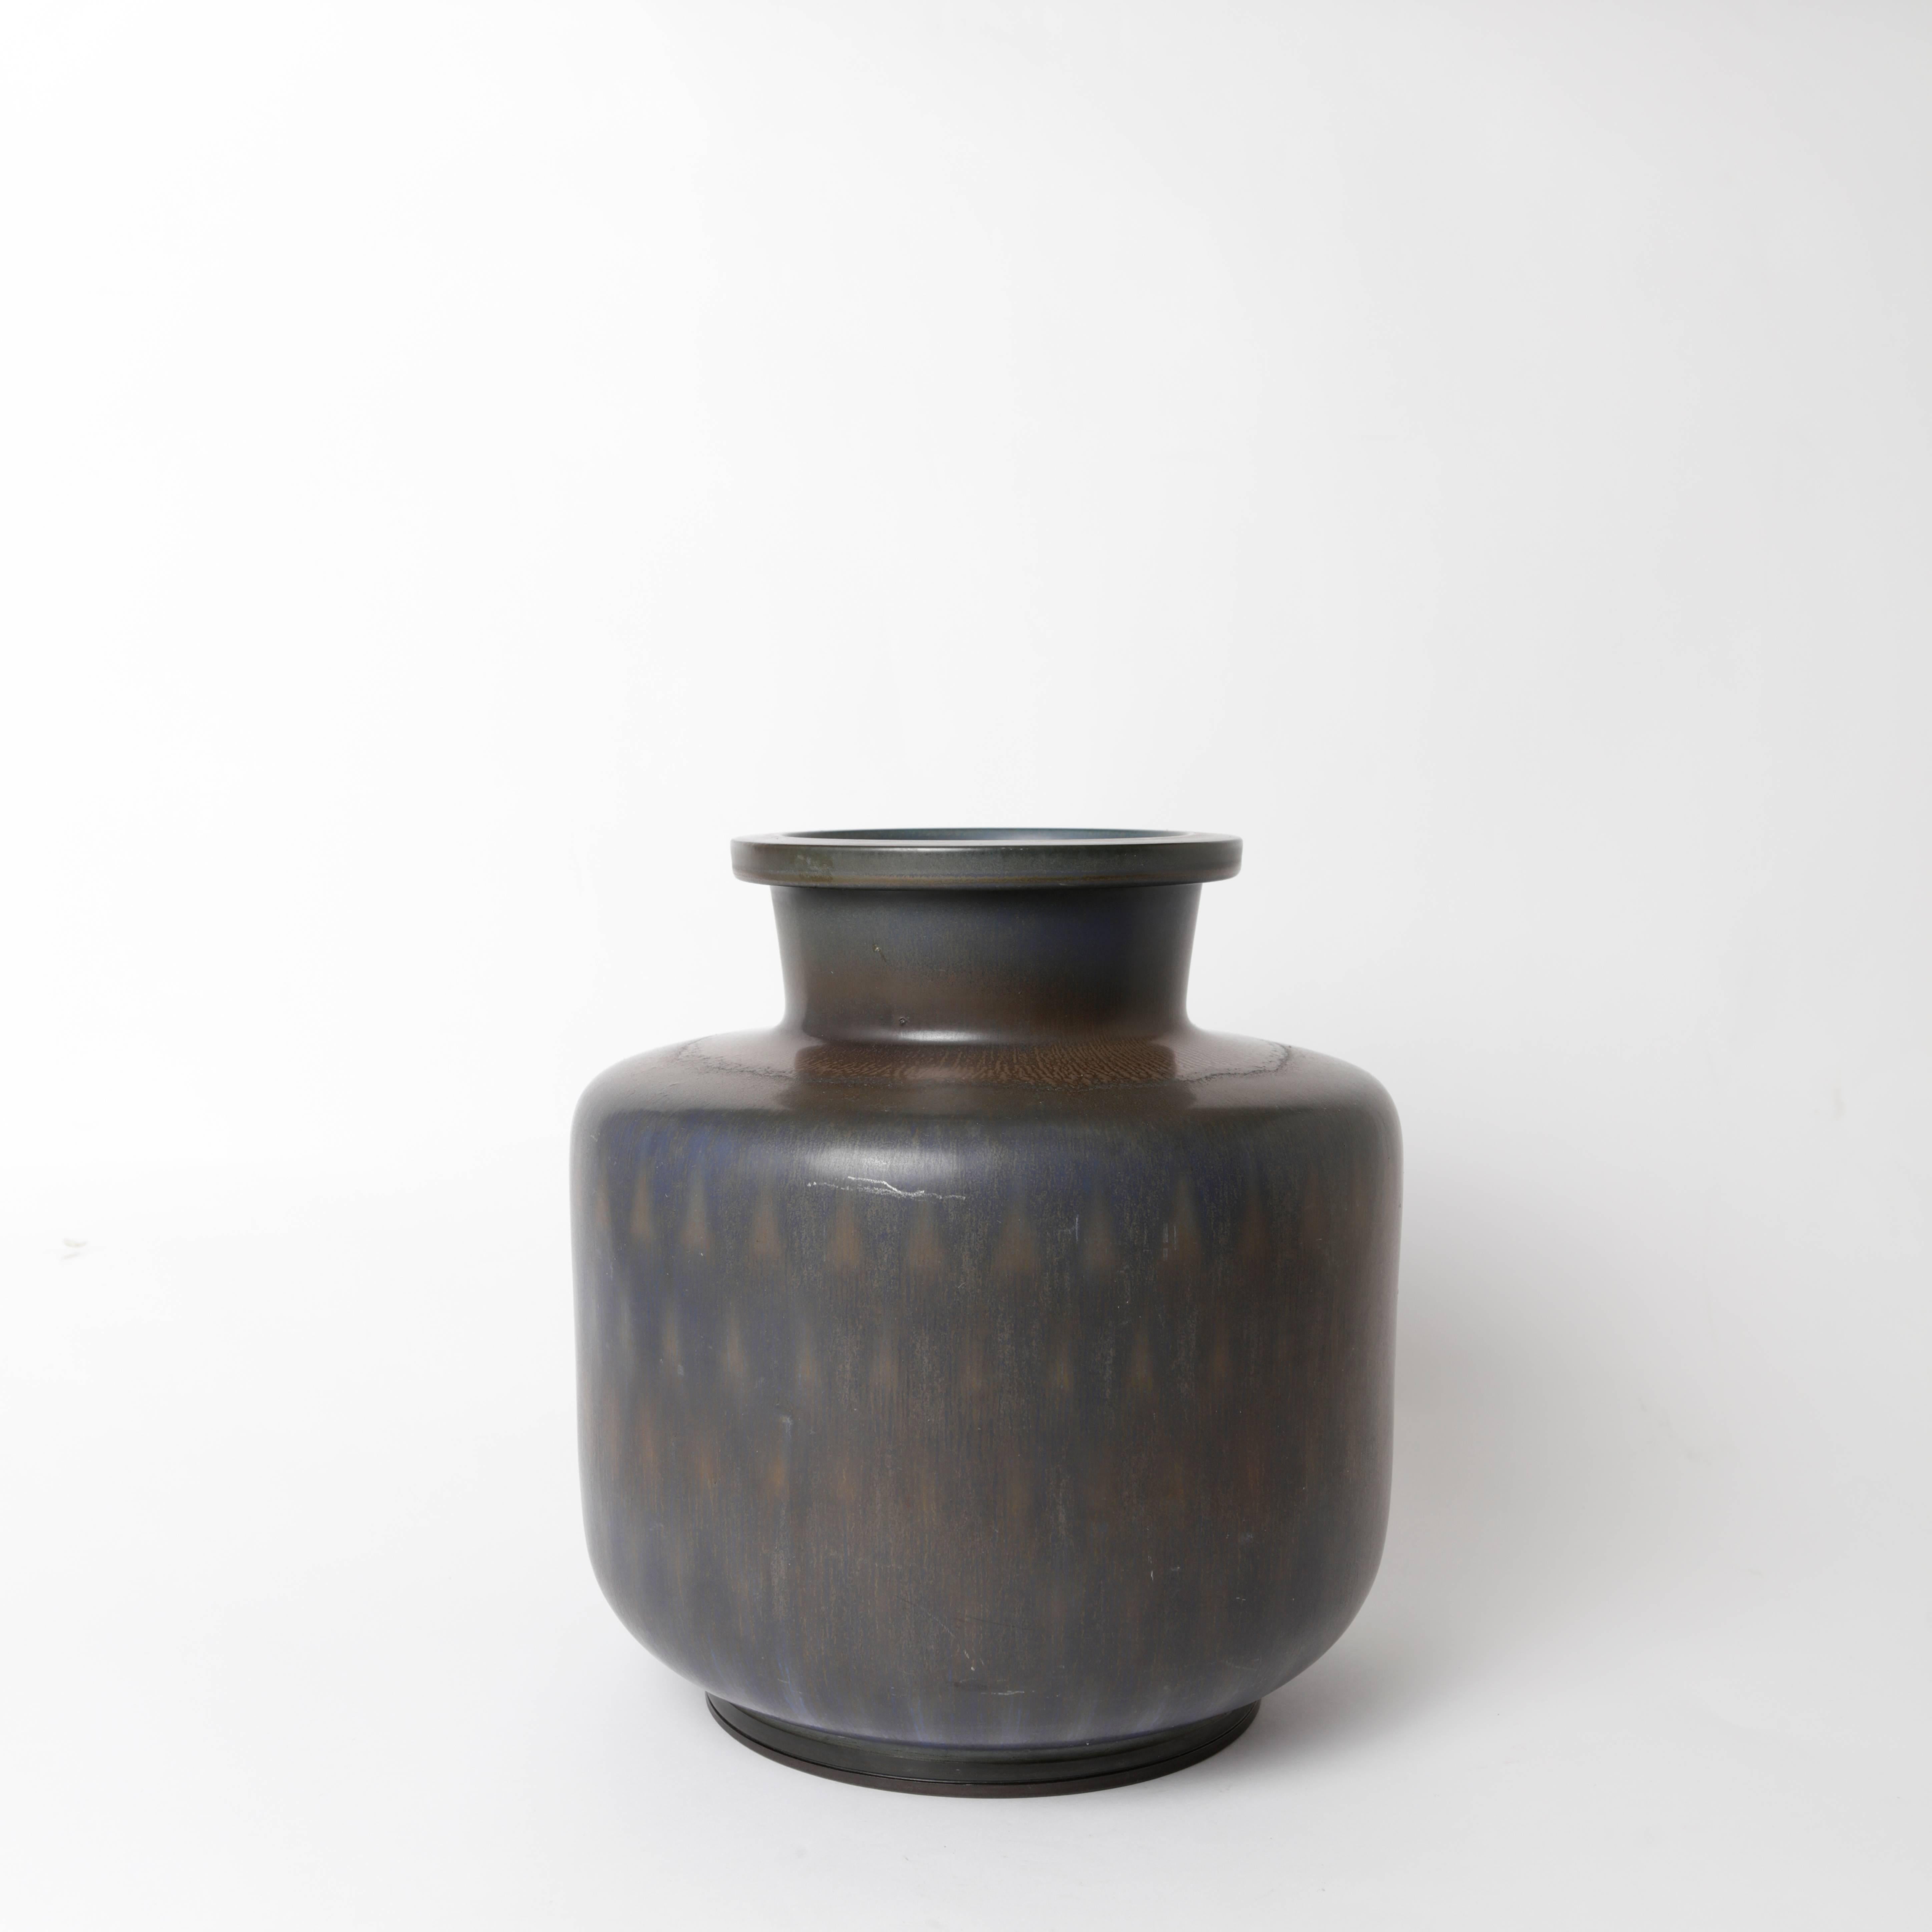 Unique stoneware vase by Berndt Friberg for Gustavsberg 1962 with geometric harefur glaze.
Measure: Height 27.5 cm/ 10.8